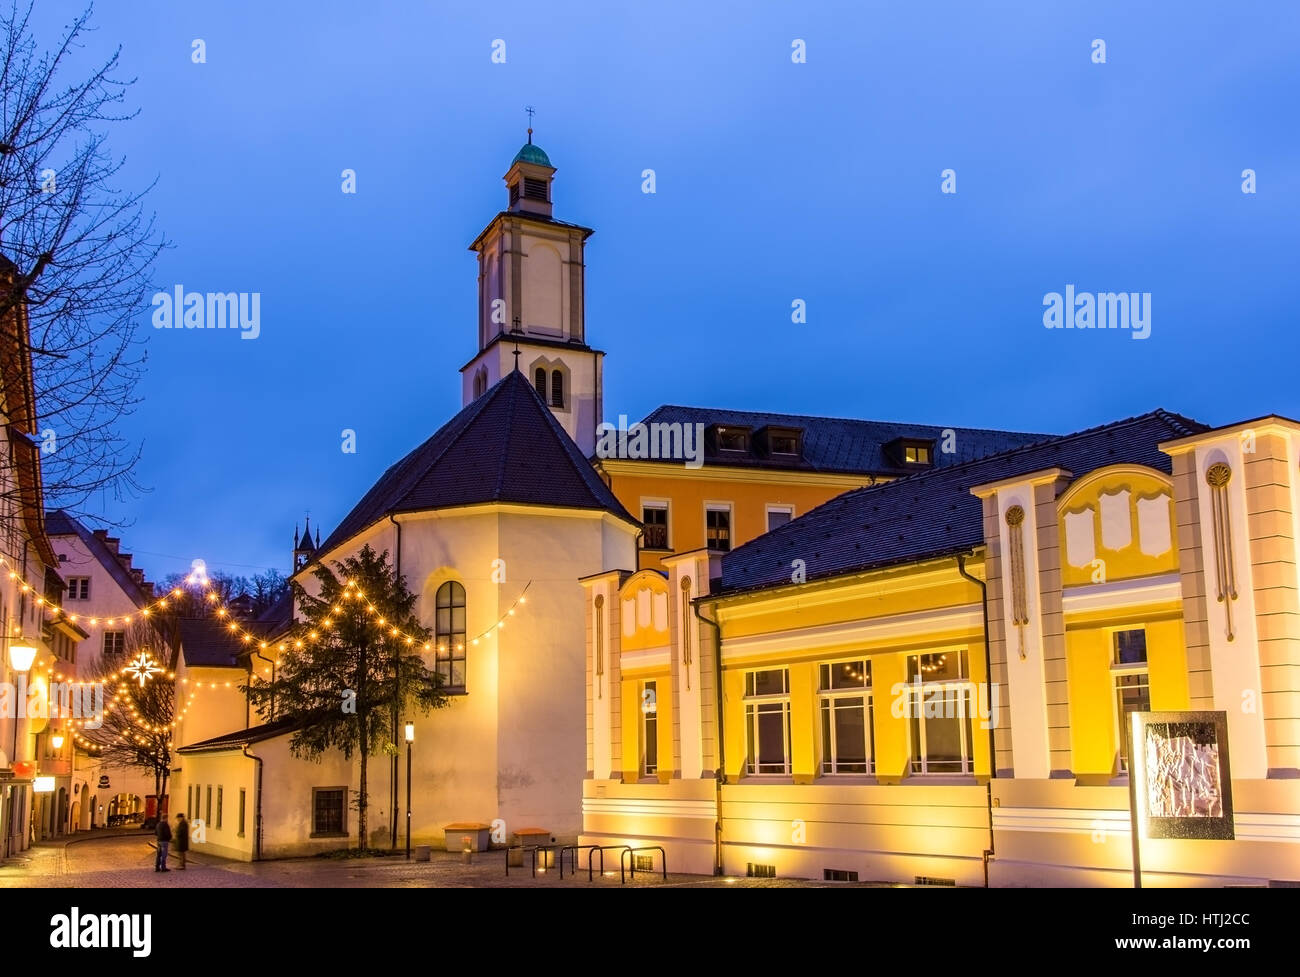 Marktplatz square with St. John's Church in Feldkirch - Austria Stock Photo